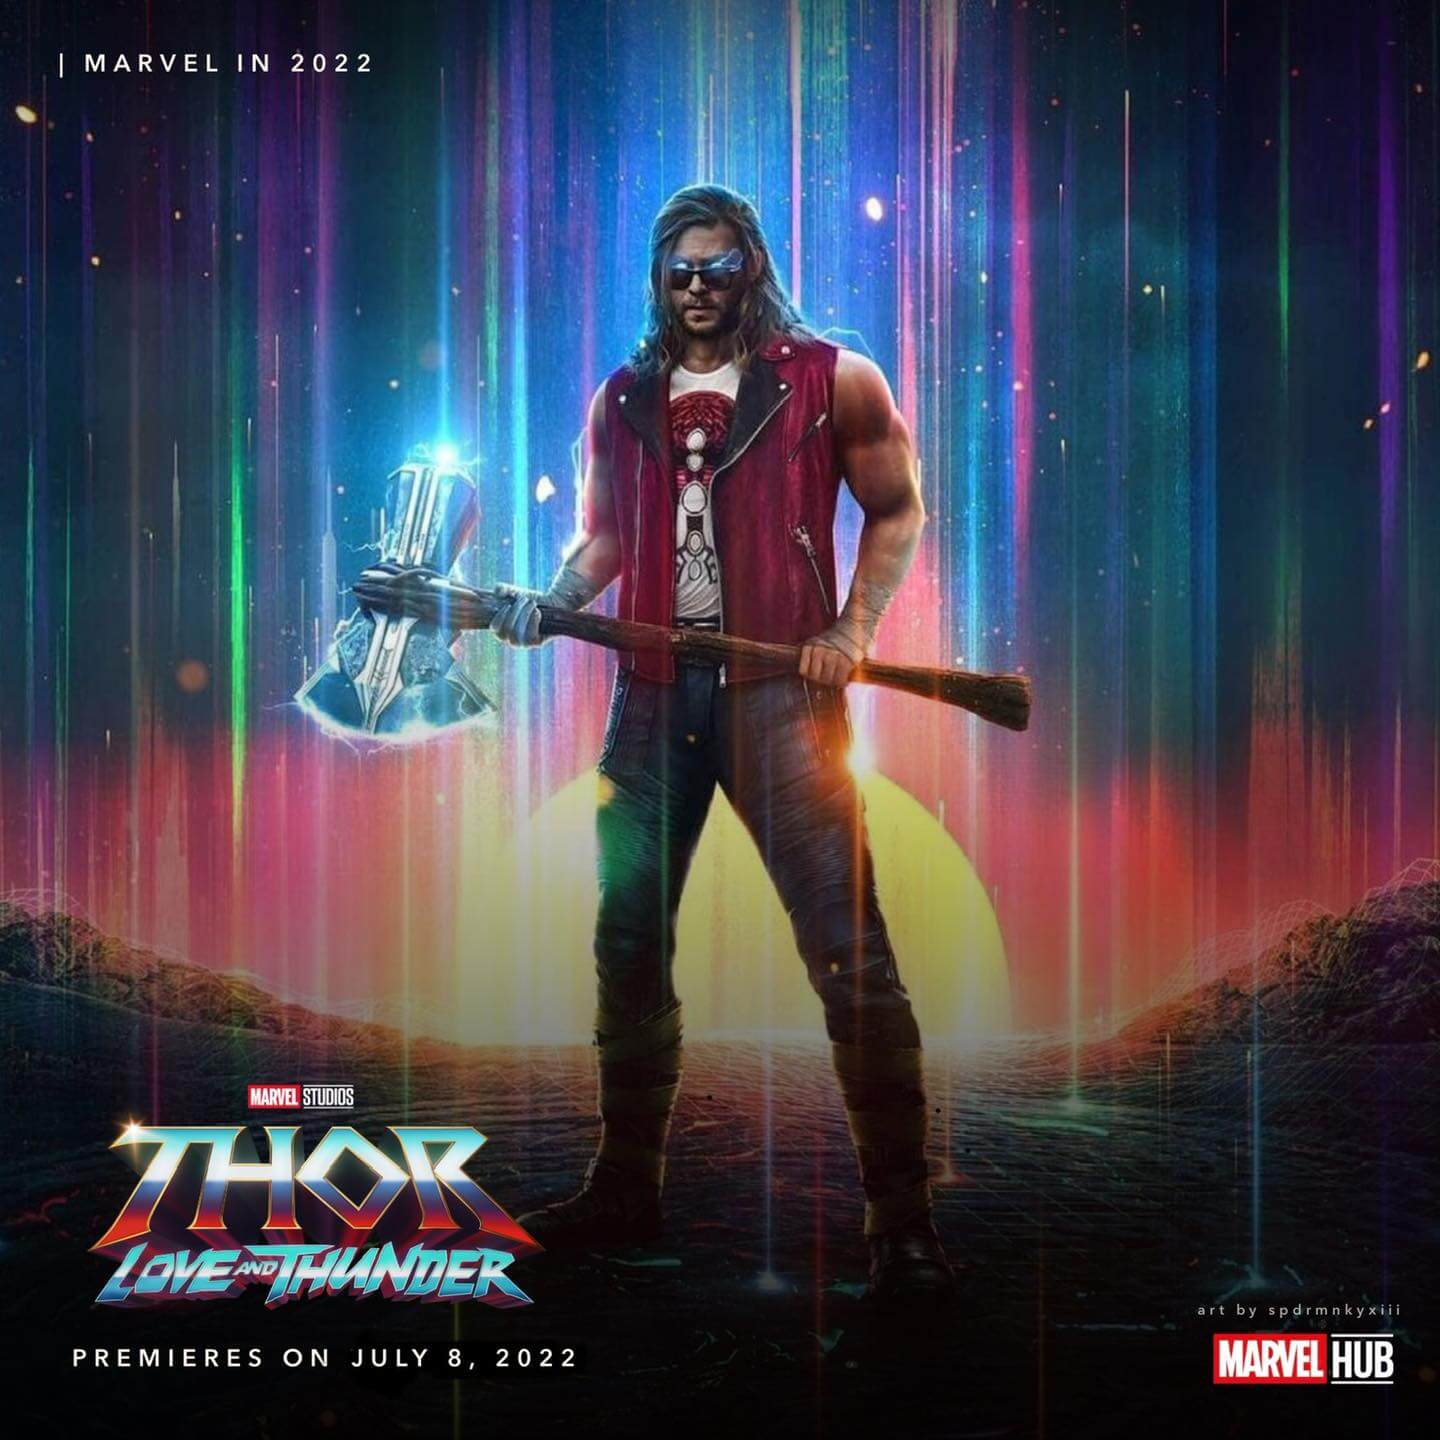 Magic Movie 2022 3 Thor love and thunder